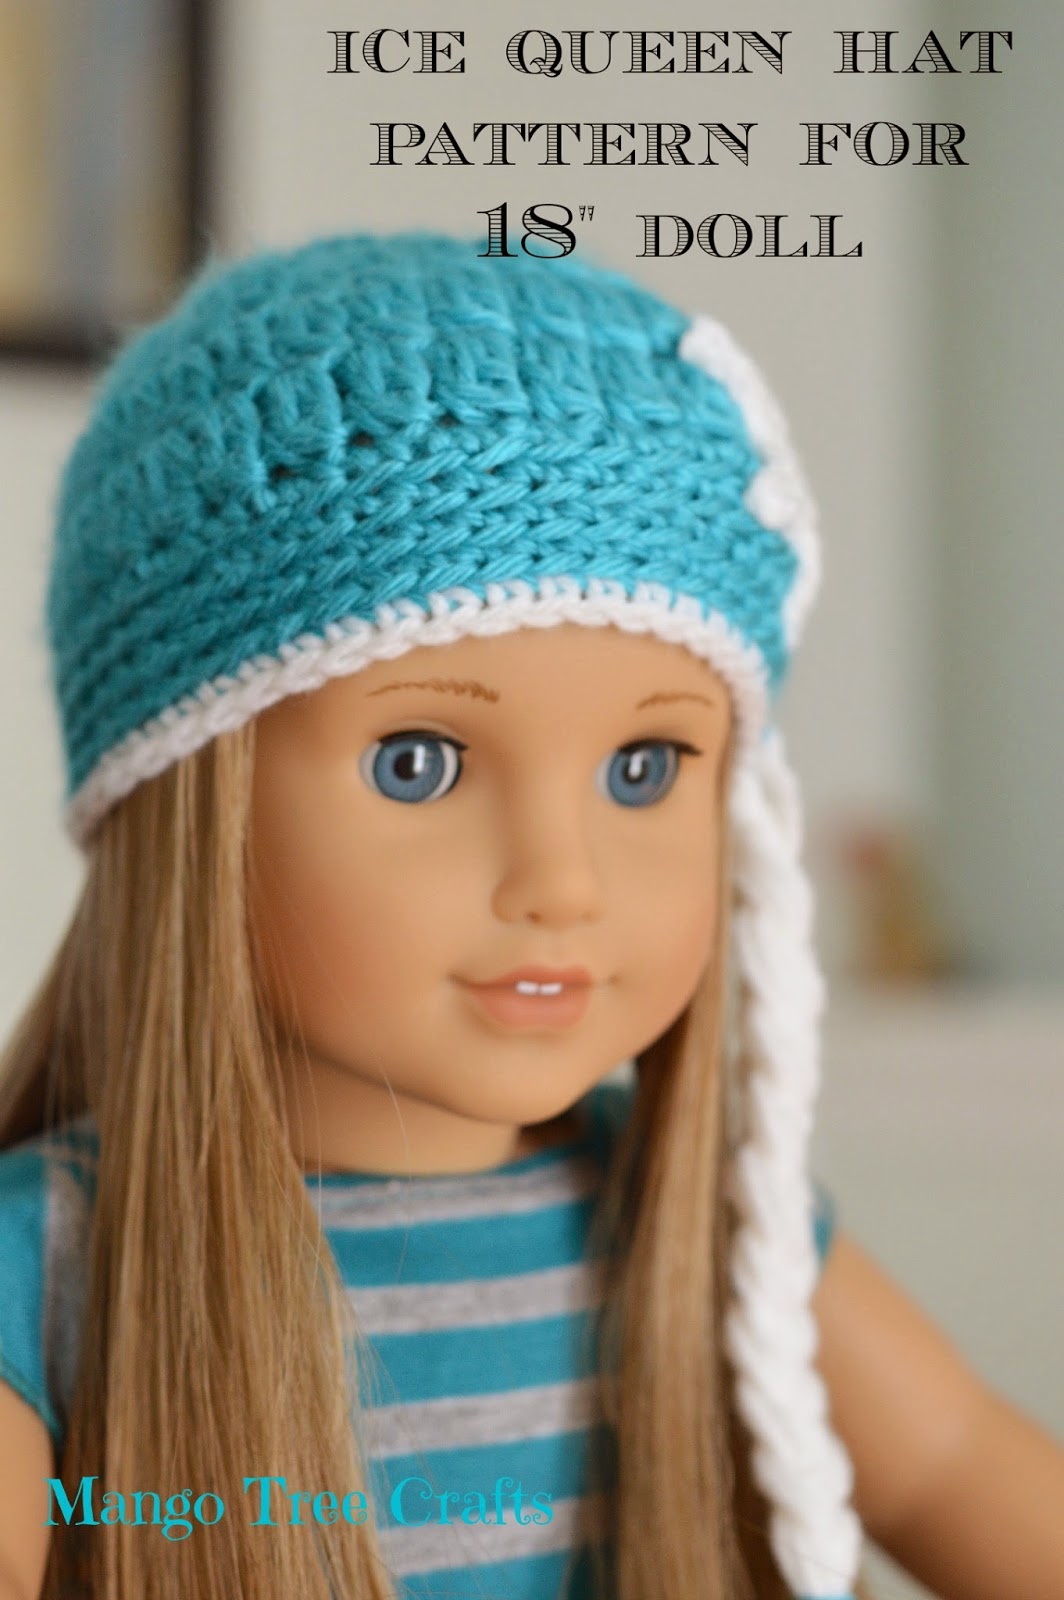 Ice queen crochet hat pattern for 18" doll